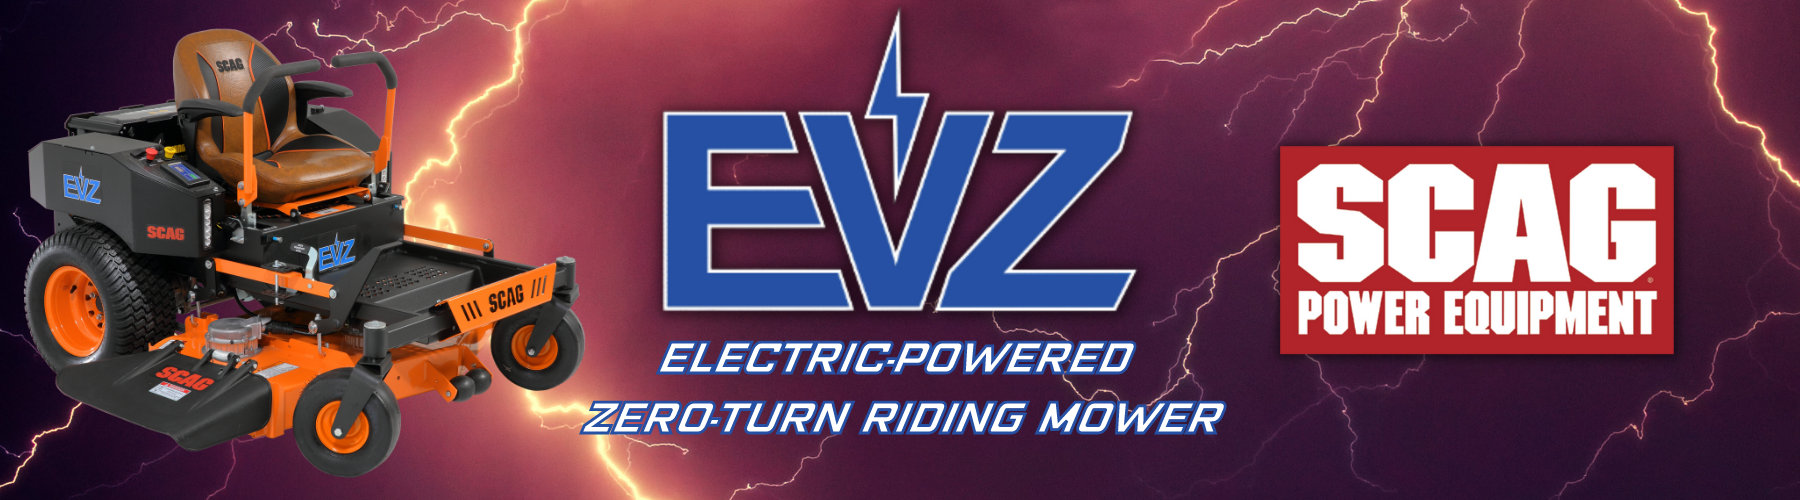 Scag EVZ Electric Powered Zero Turn Riding Lawn Mower 52 inch Gilford hardware